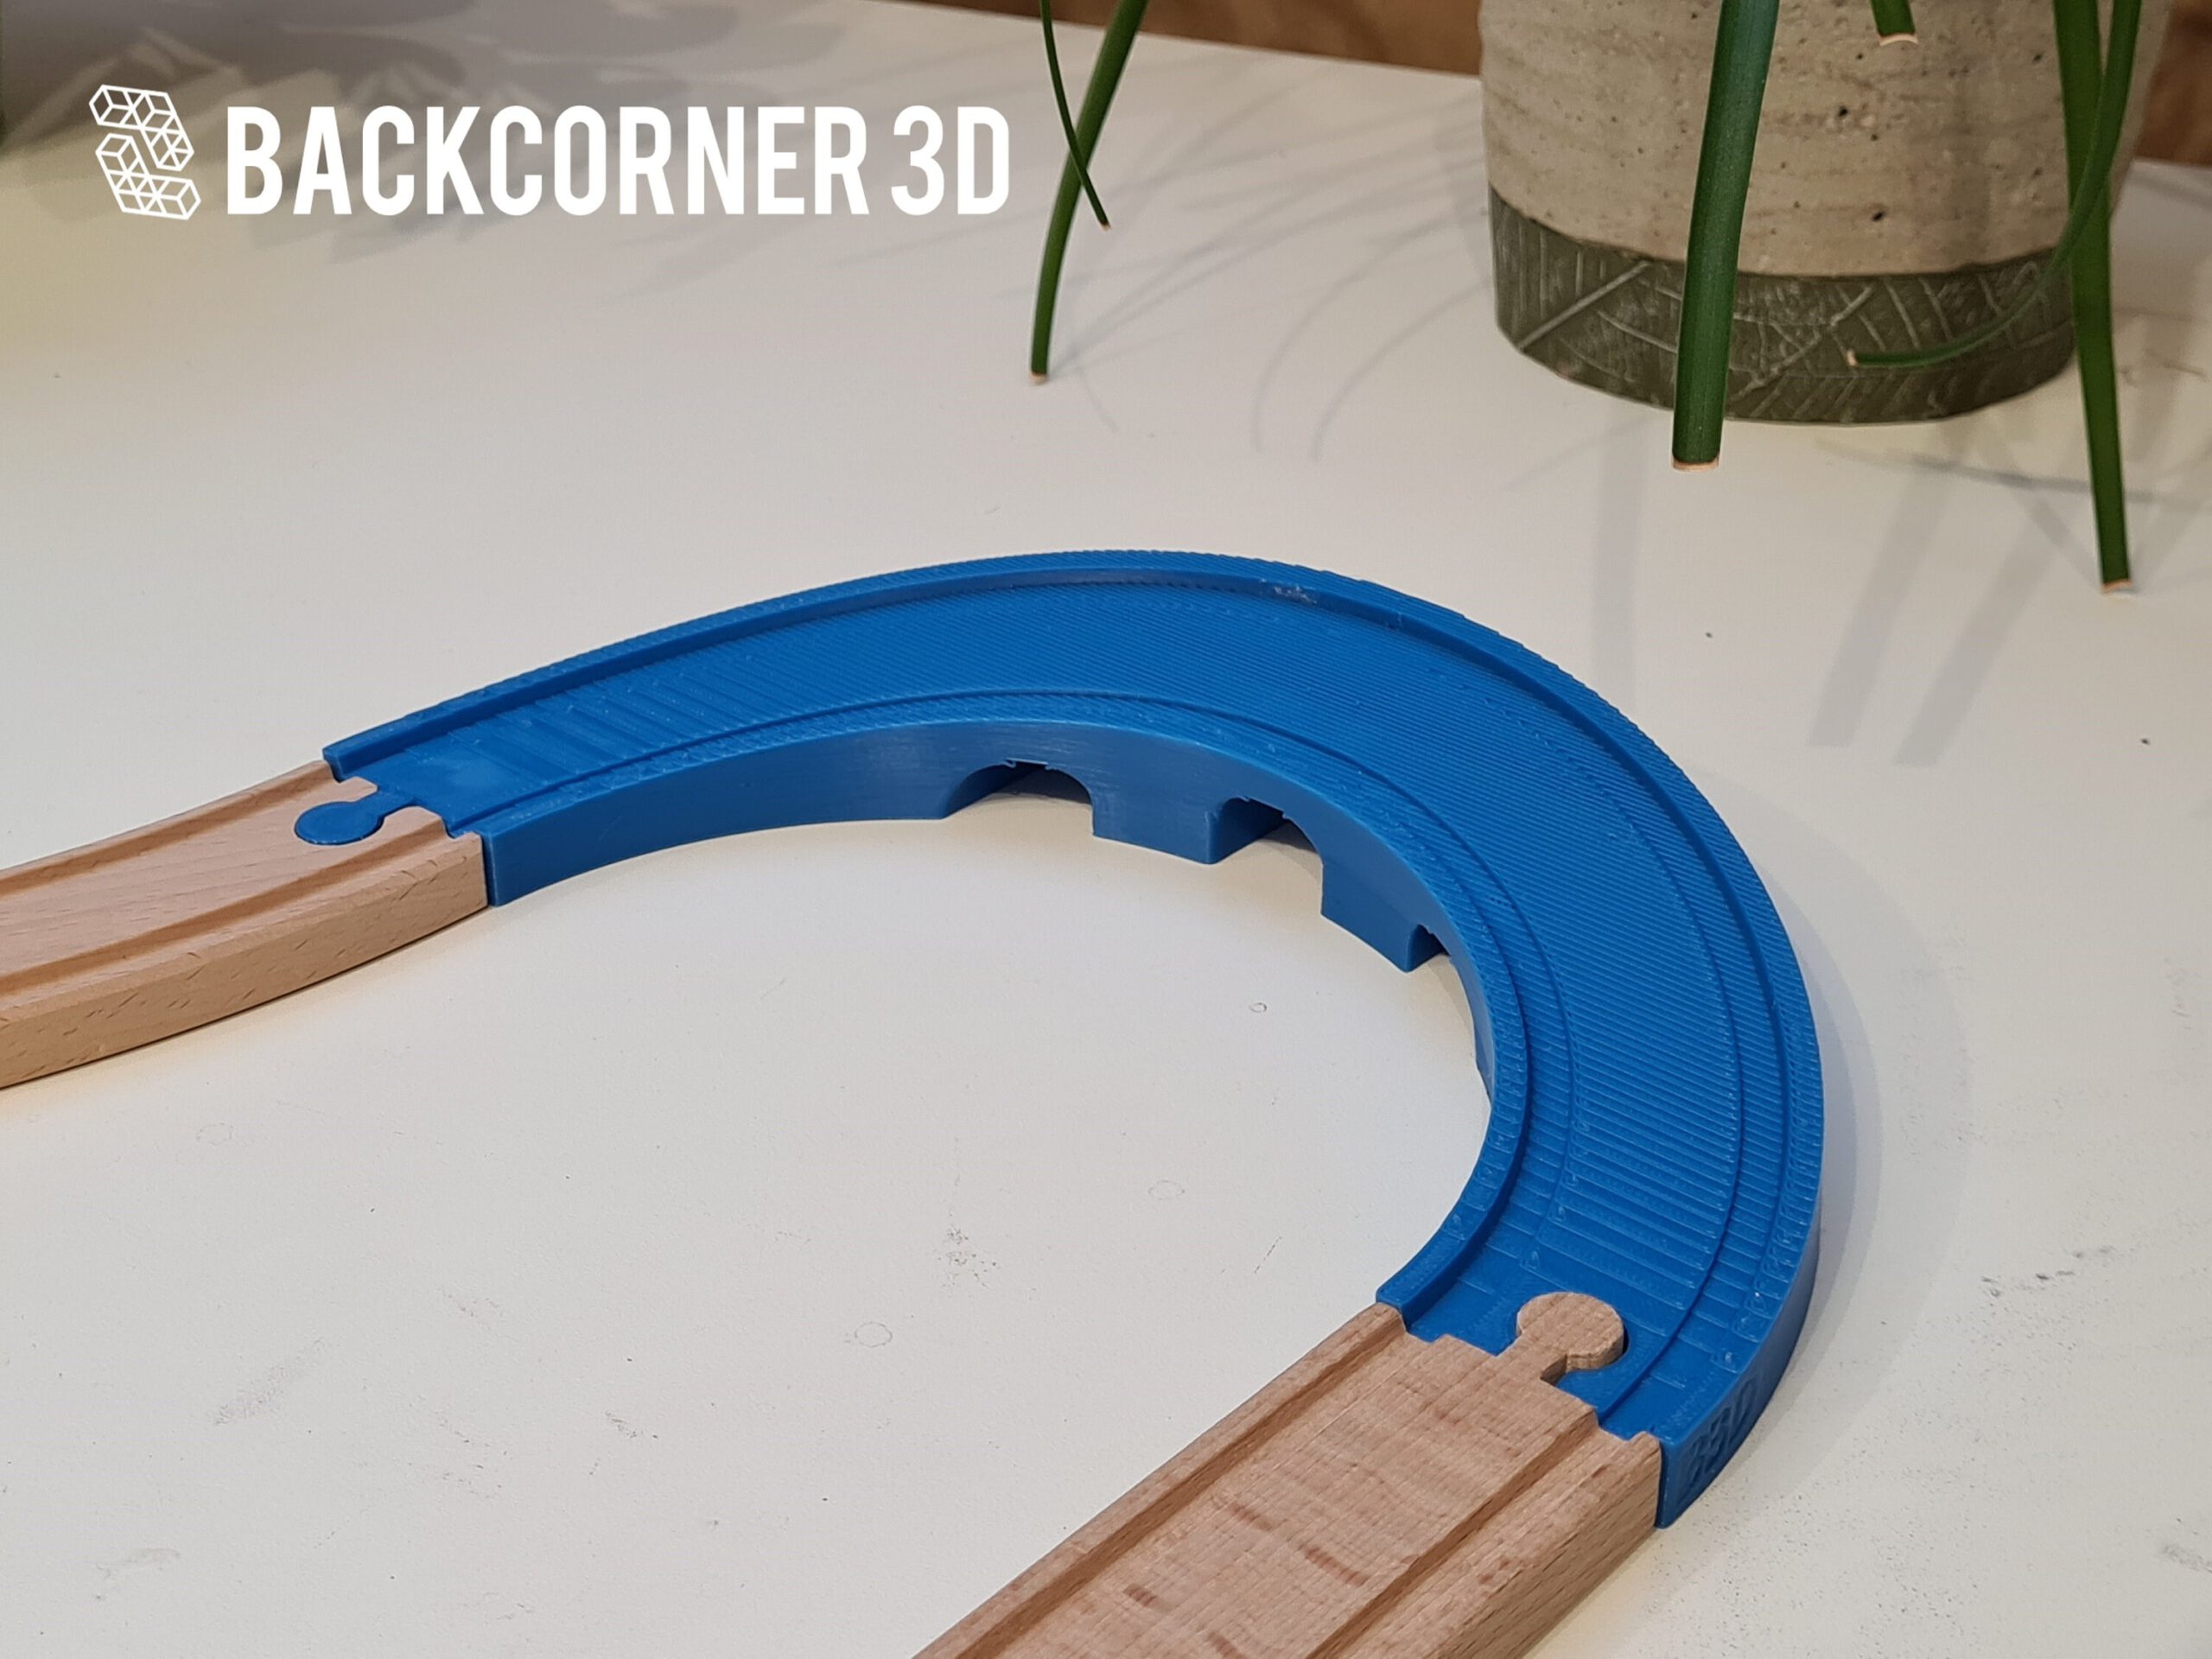 Banked curve wooden train track / Brio extension / Imaginarium -   Portugal